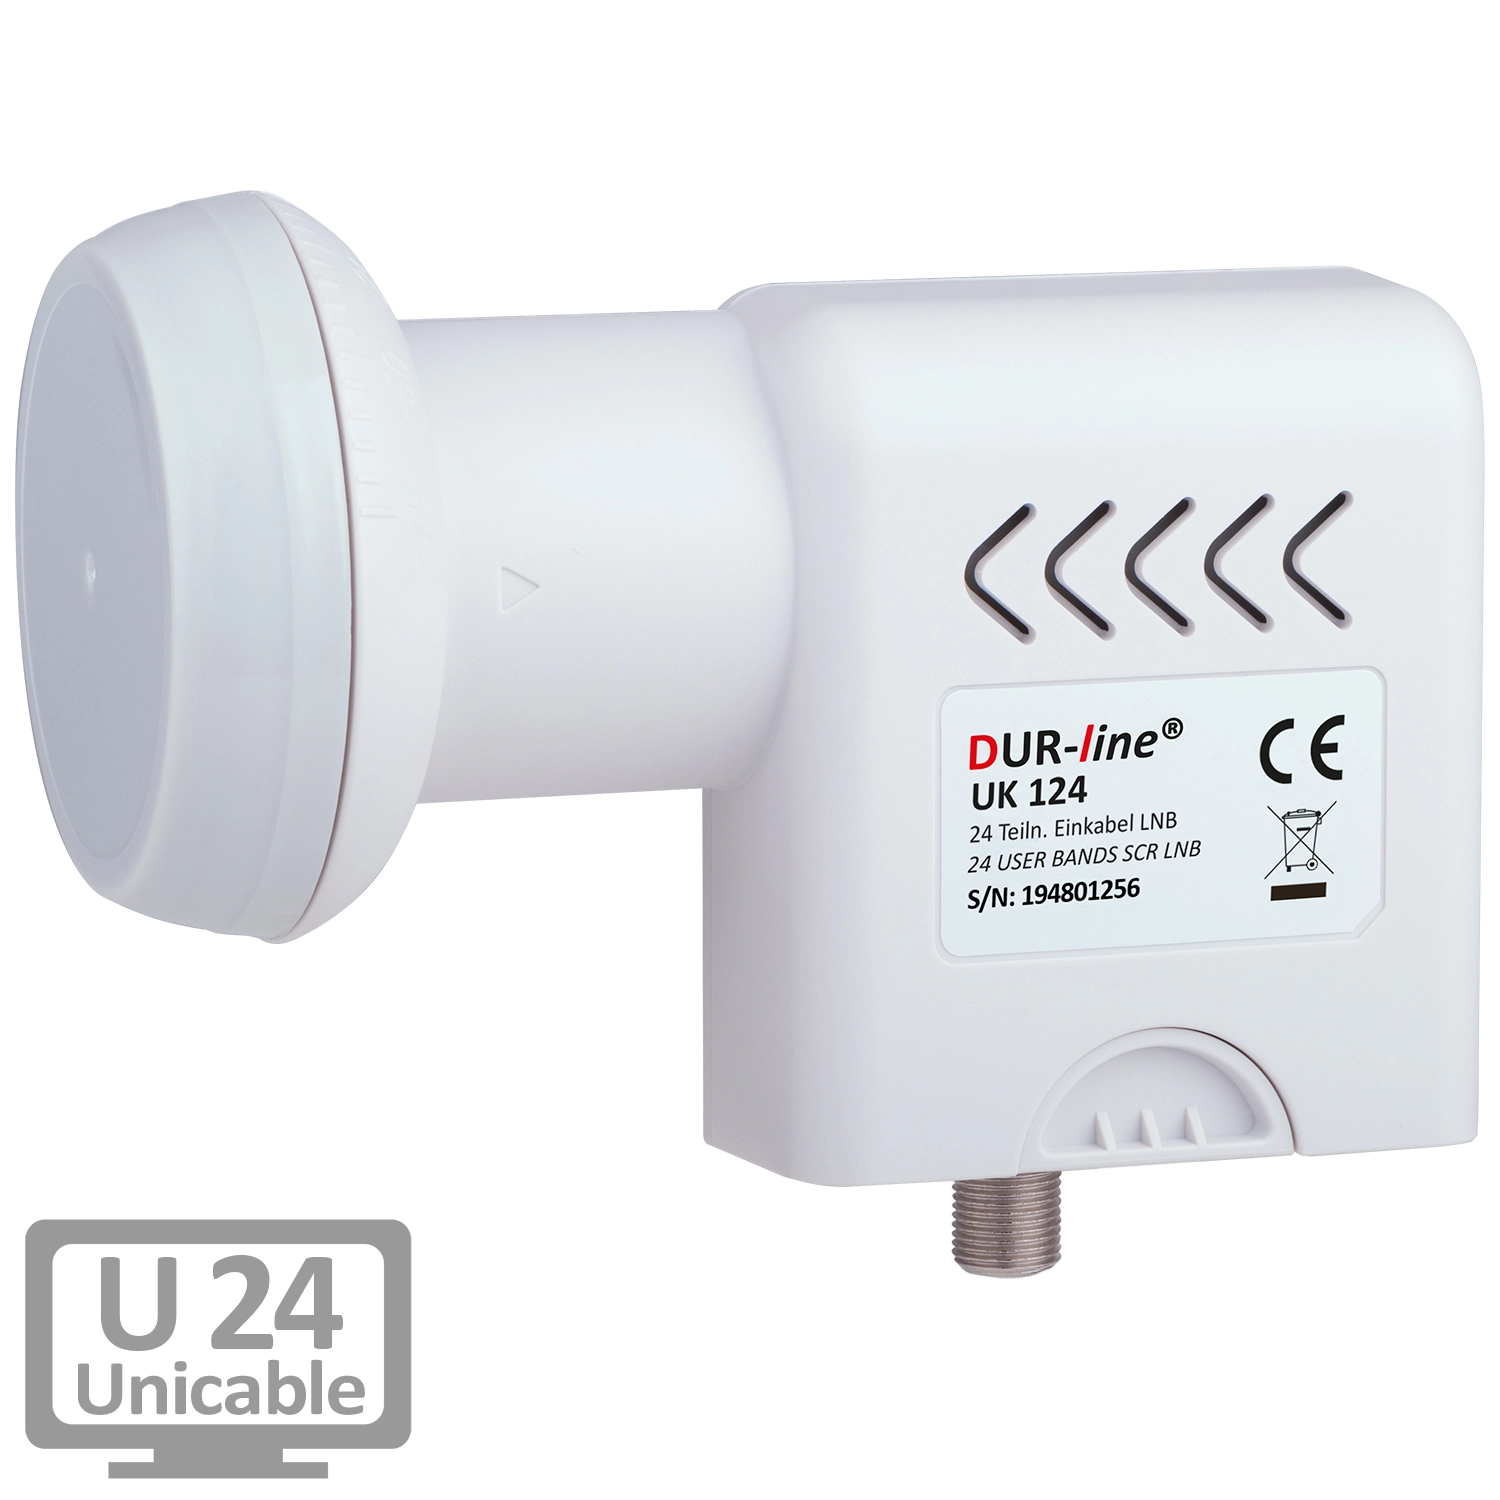 DUR-line UK 124 - Unicable LNB